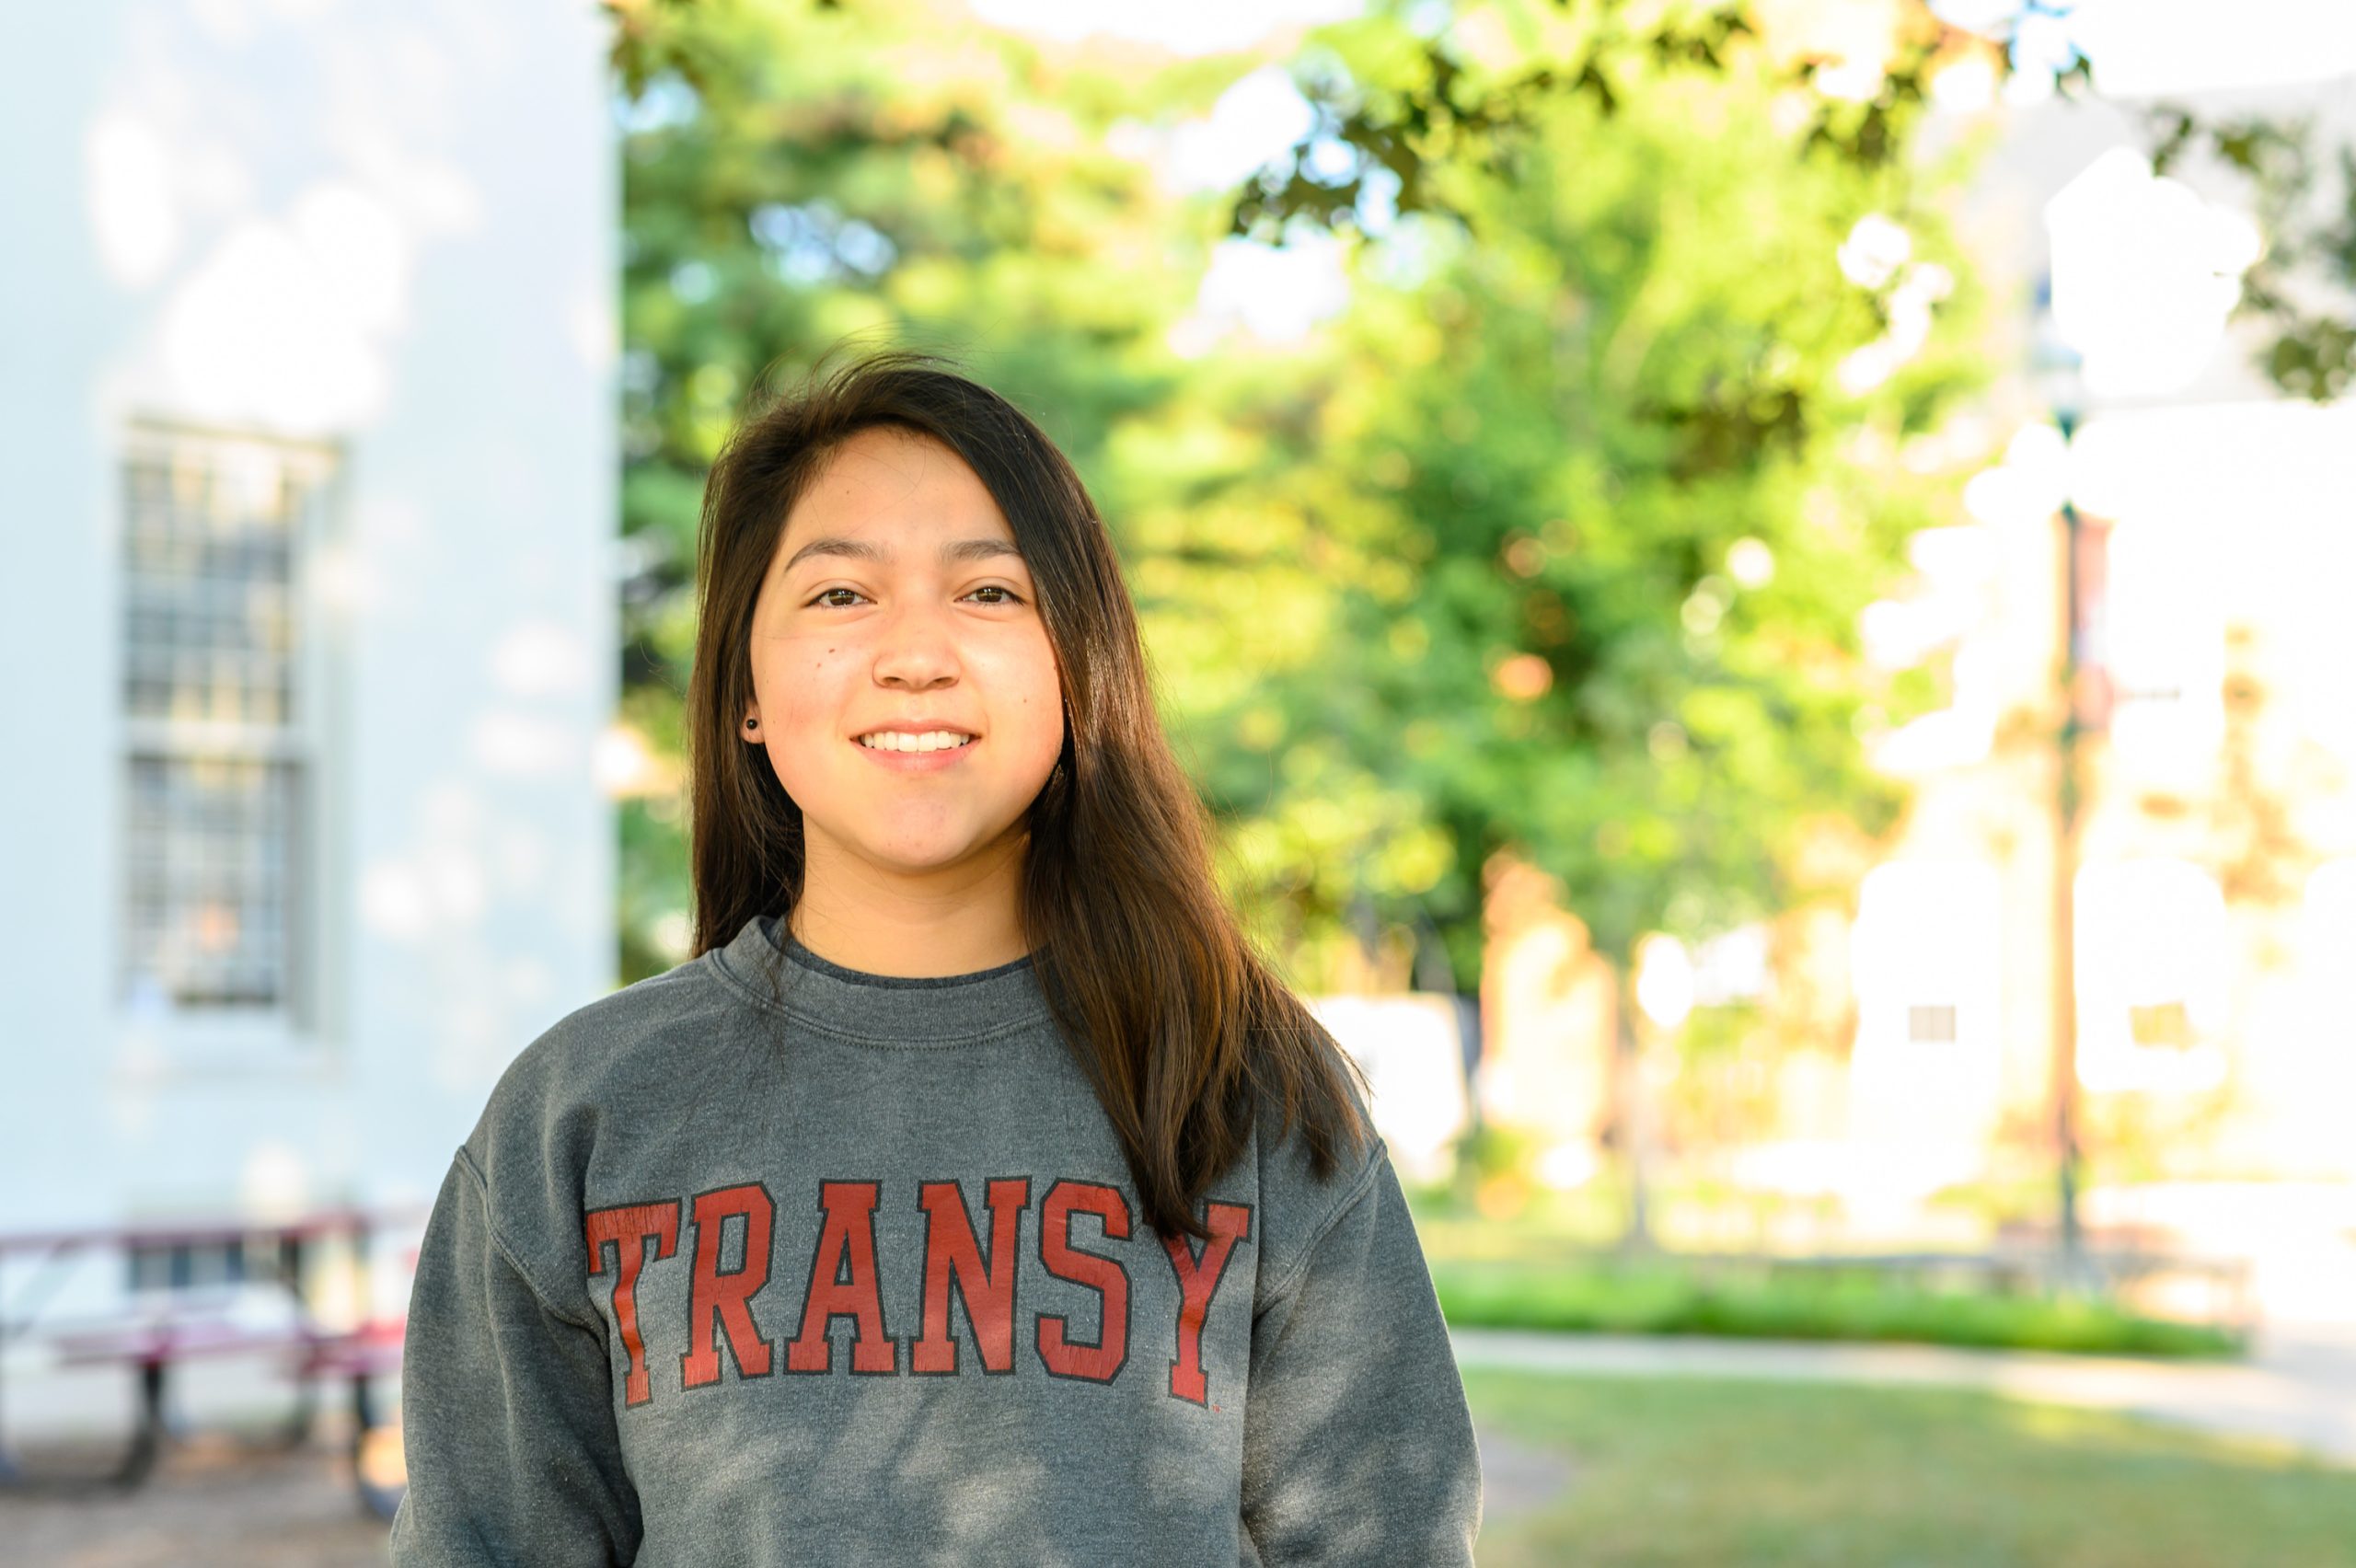 Transylvania legacy student looks forward to connecting with alumni during Phonathon